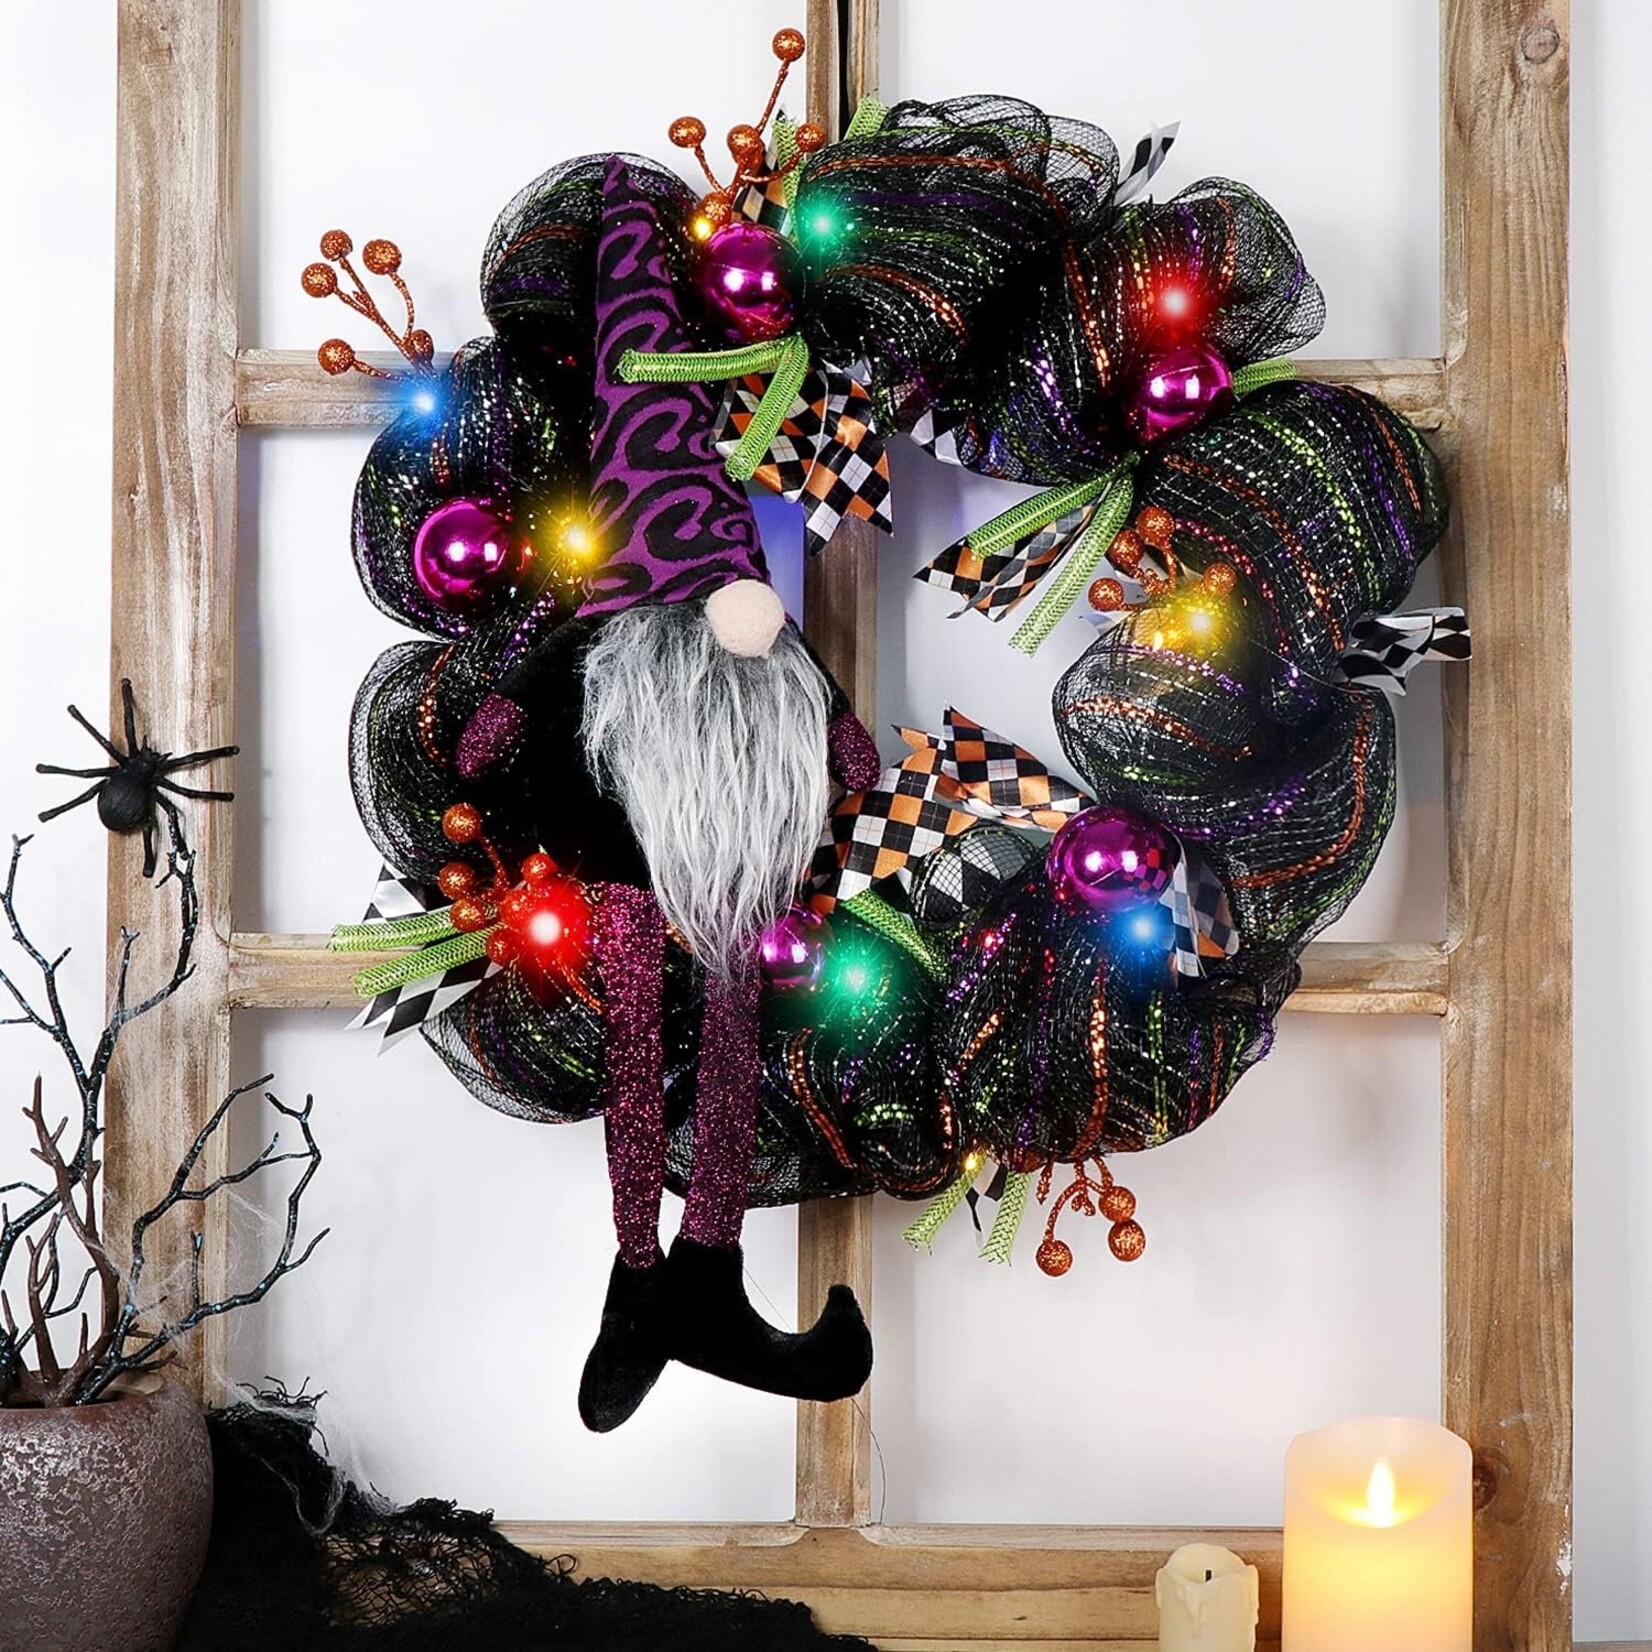 Pikronsh 16" Halloween Wreath with Lights